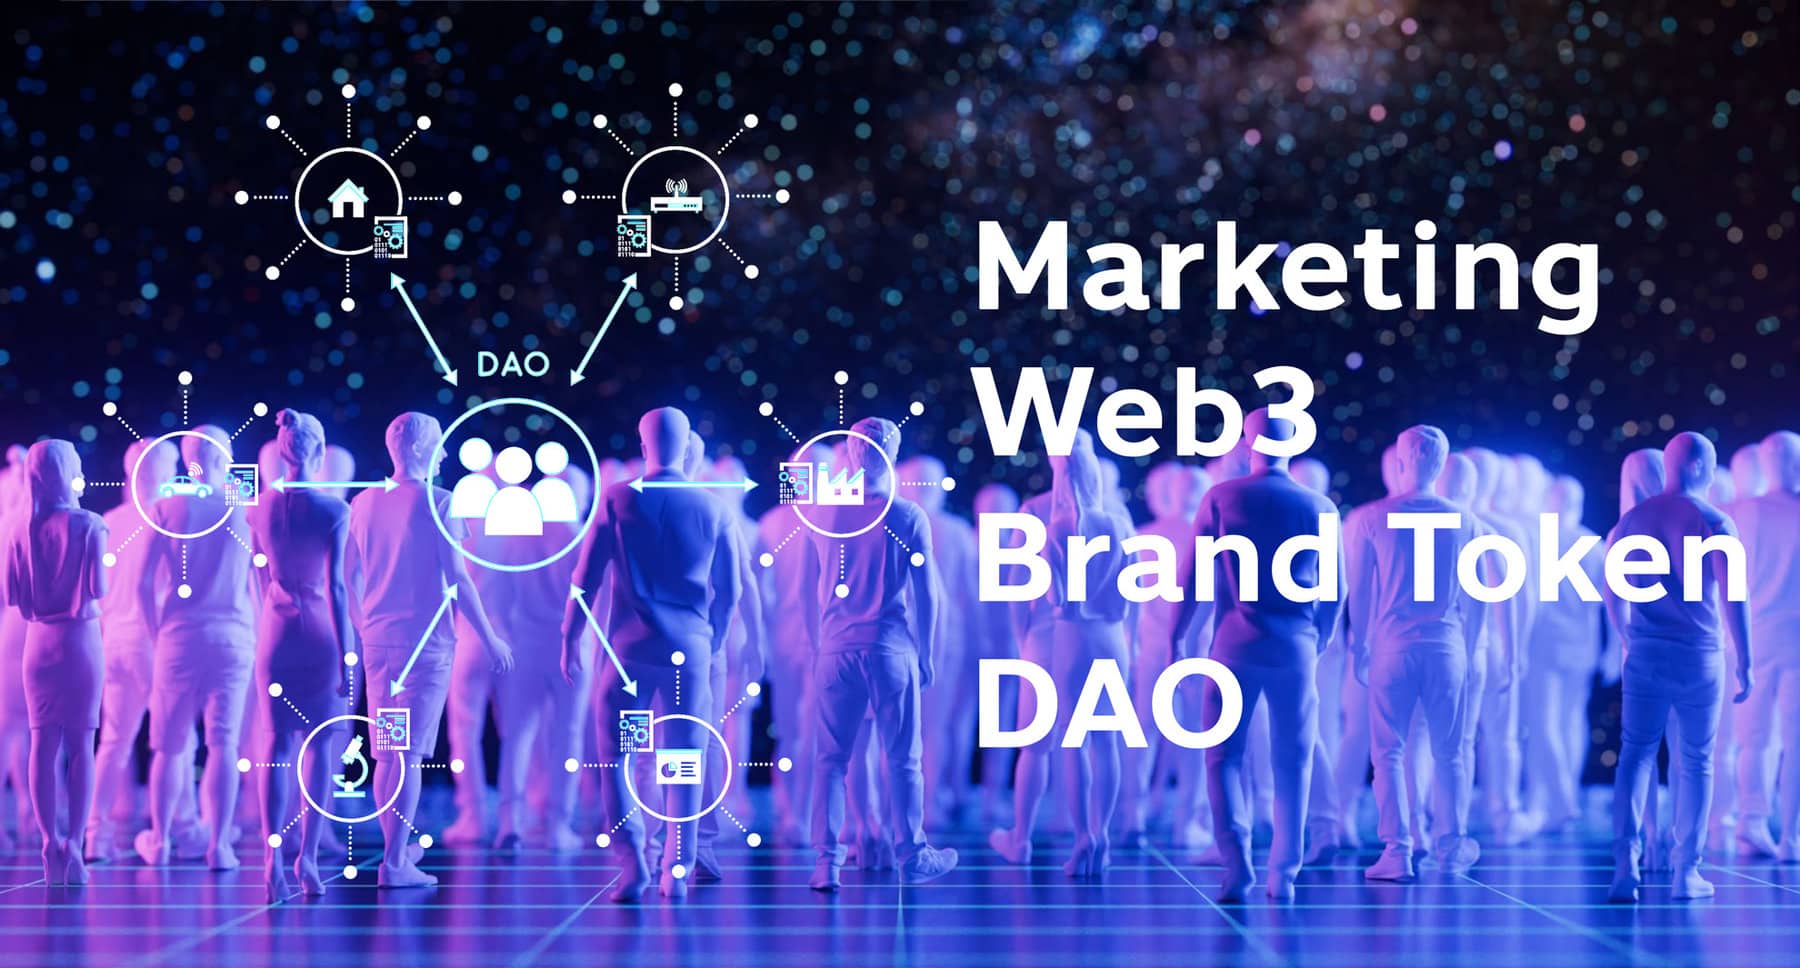 Marketing กับ Web3 การตลาดยุค Community Driven ด้วย DAO และ Brand Token